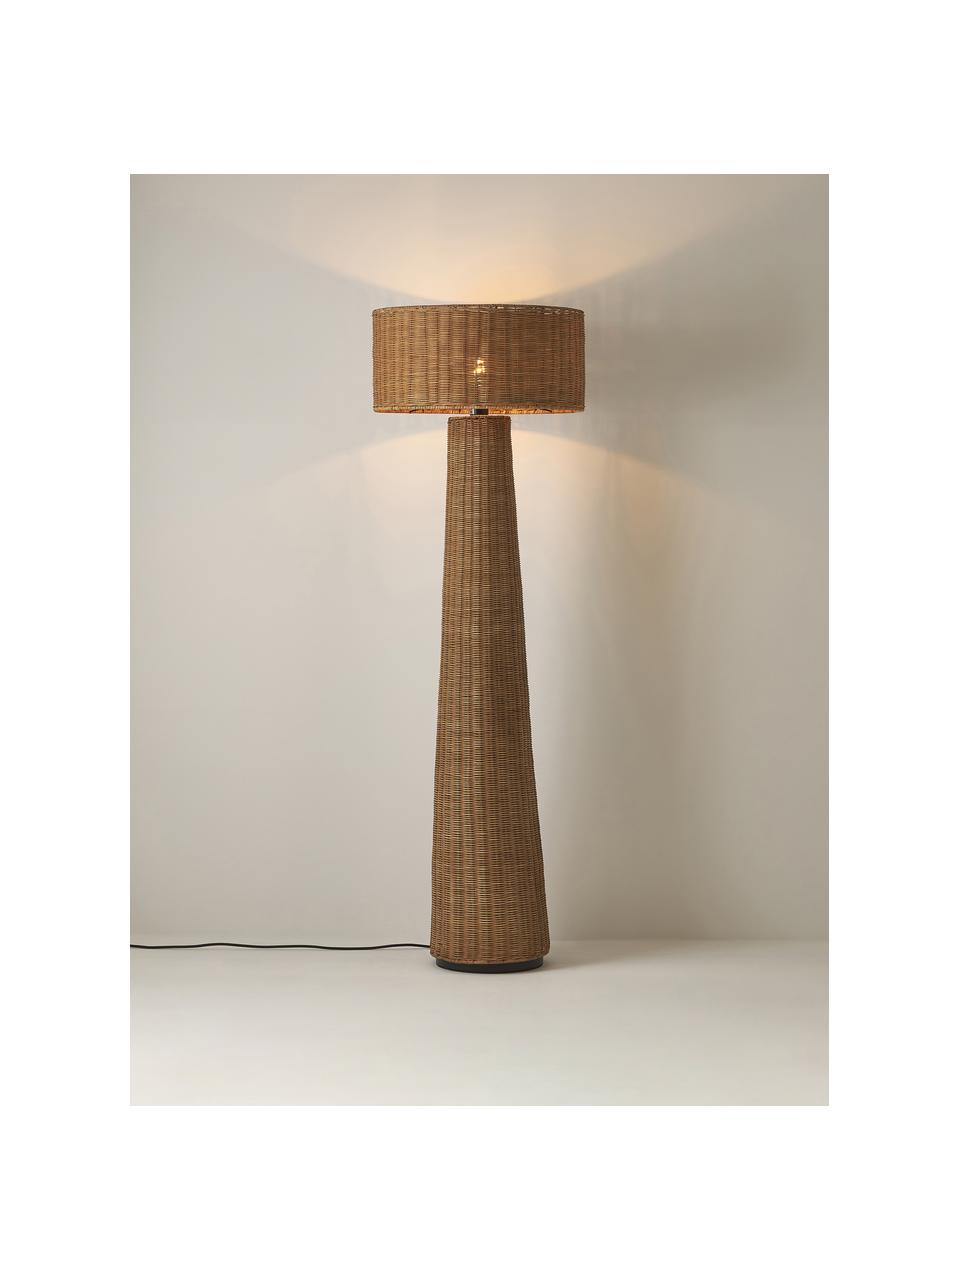 Handgefertigte Design-Stehlampe Paolo aus Rattan, Lampenschirm: Rattan, Gestell: Metall, Hellbraun, H 150 cm